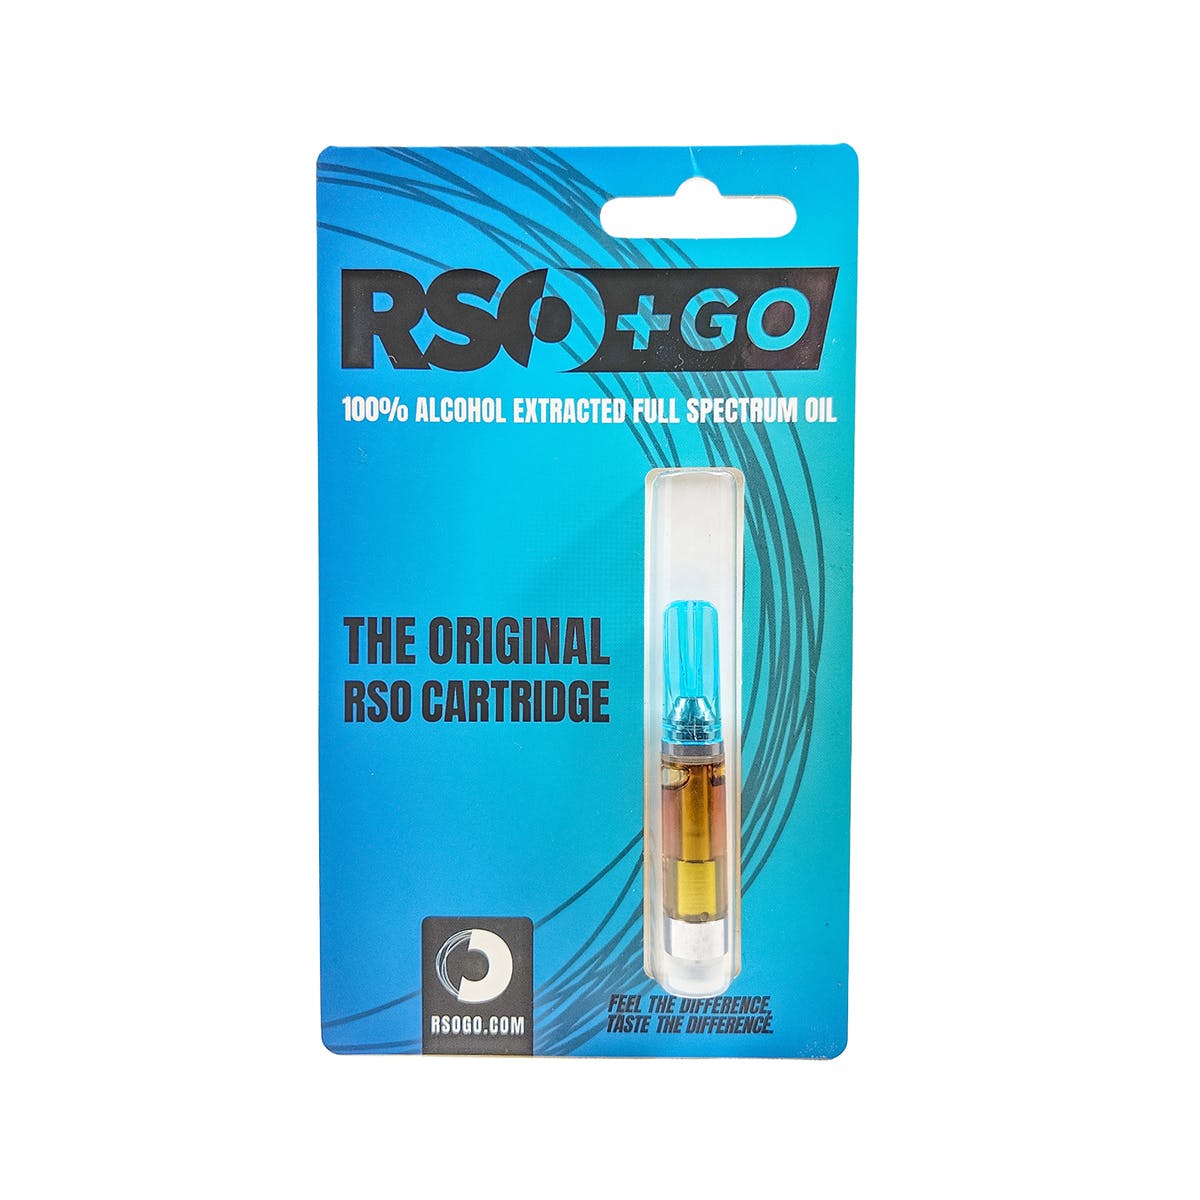 RSO+GO Cartridge - Memory Loss - WA